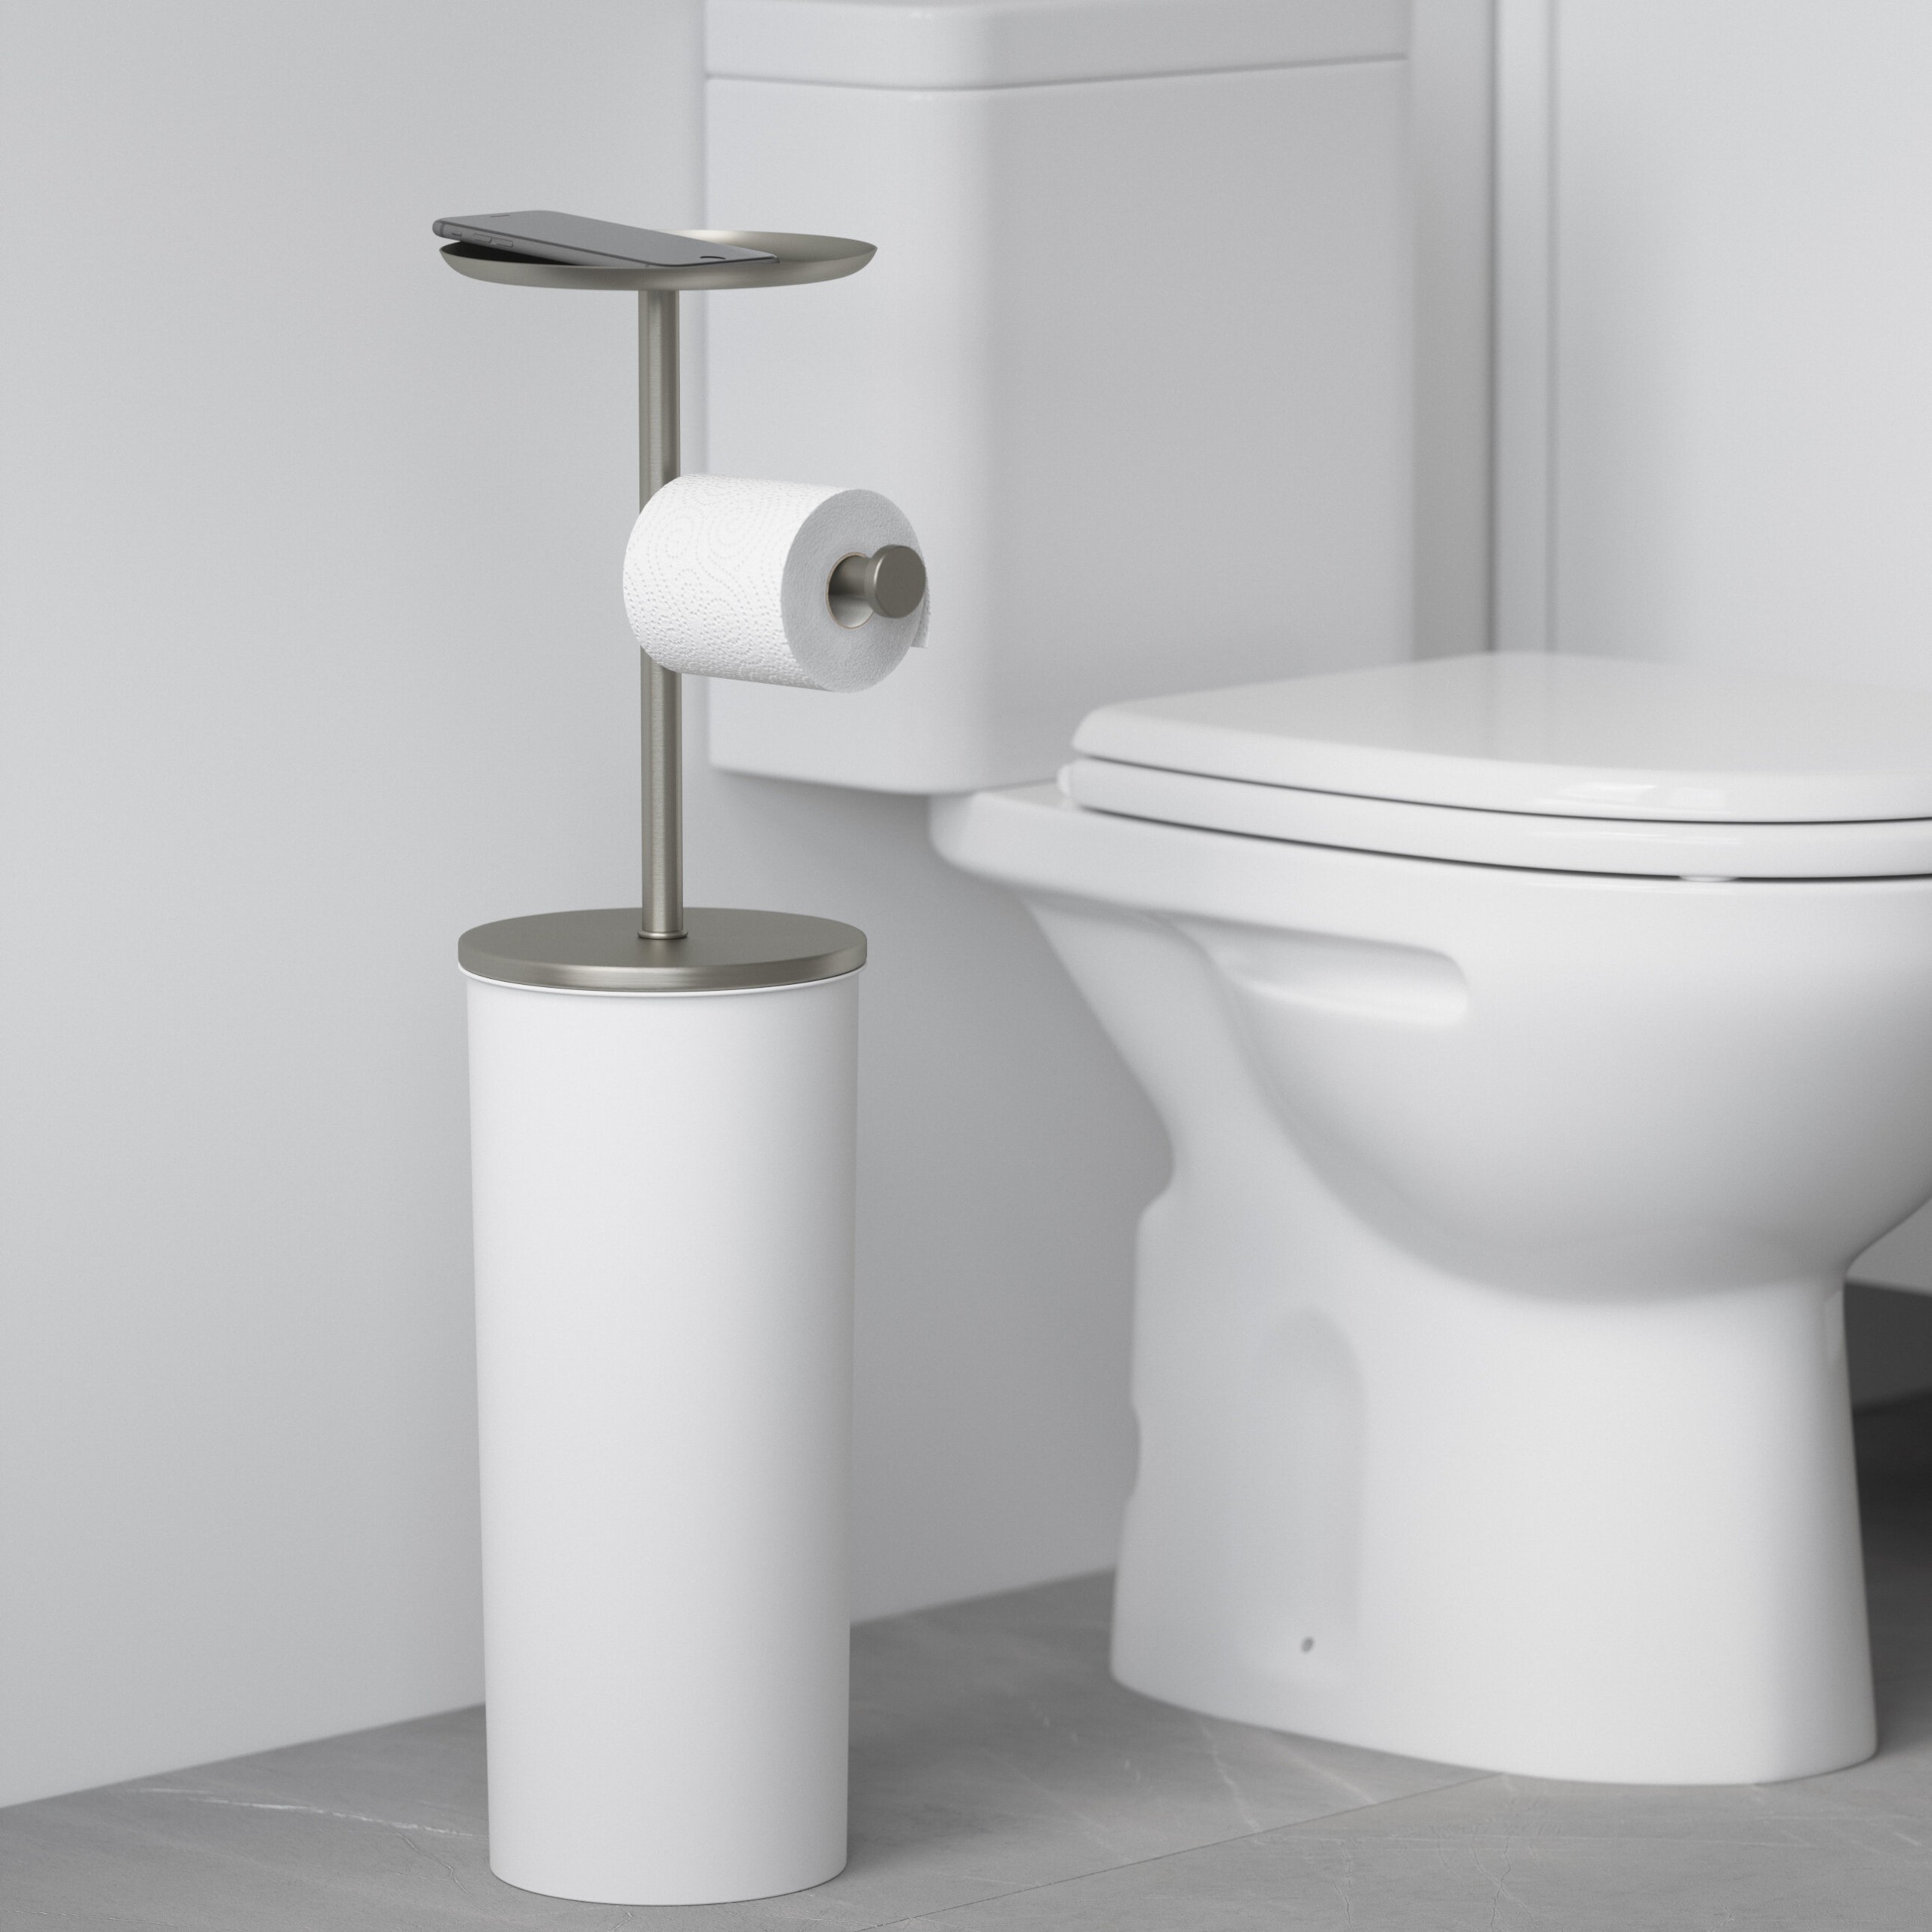 Portaloo Freestanding Toilet Paper Stand